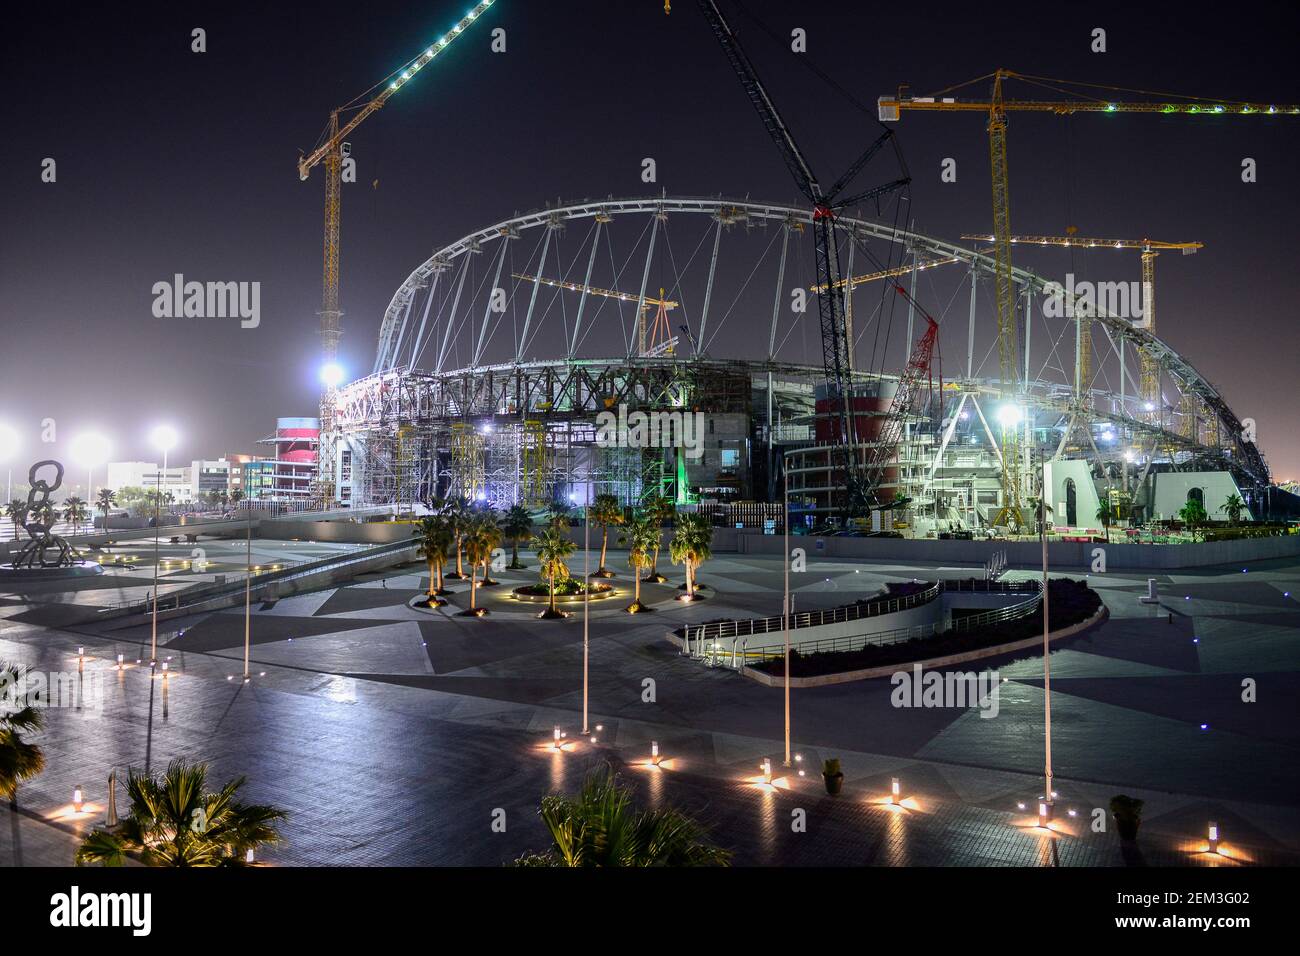 KATAR, Doha, Baustelle Khalifa International Stadium fuer die FIFA WM Fussball Weltmeisterschaft 2022, auf den Baustellen arbeiten Gastarbeiter aus aller Welt / QATAR, Doha, chantier de construction Stade international Khalifa pour la coupe du monde de la FIFA 2022, construit par l'entrepreneur midmac et contrat sixt Banque D'Images